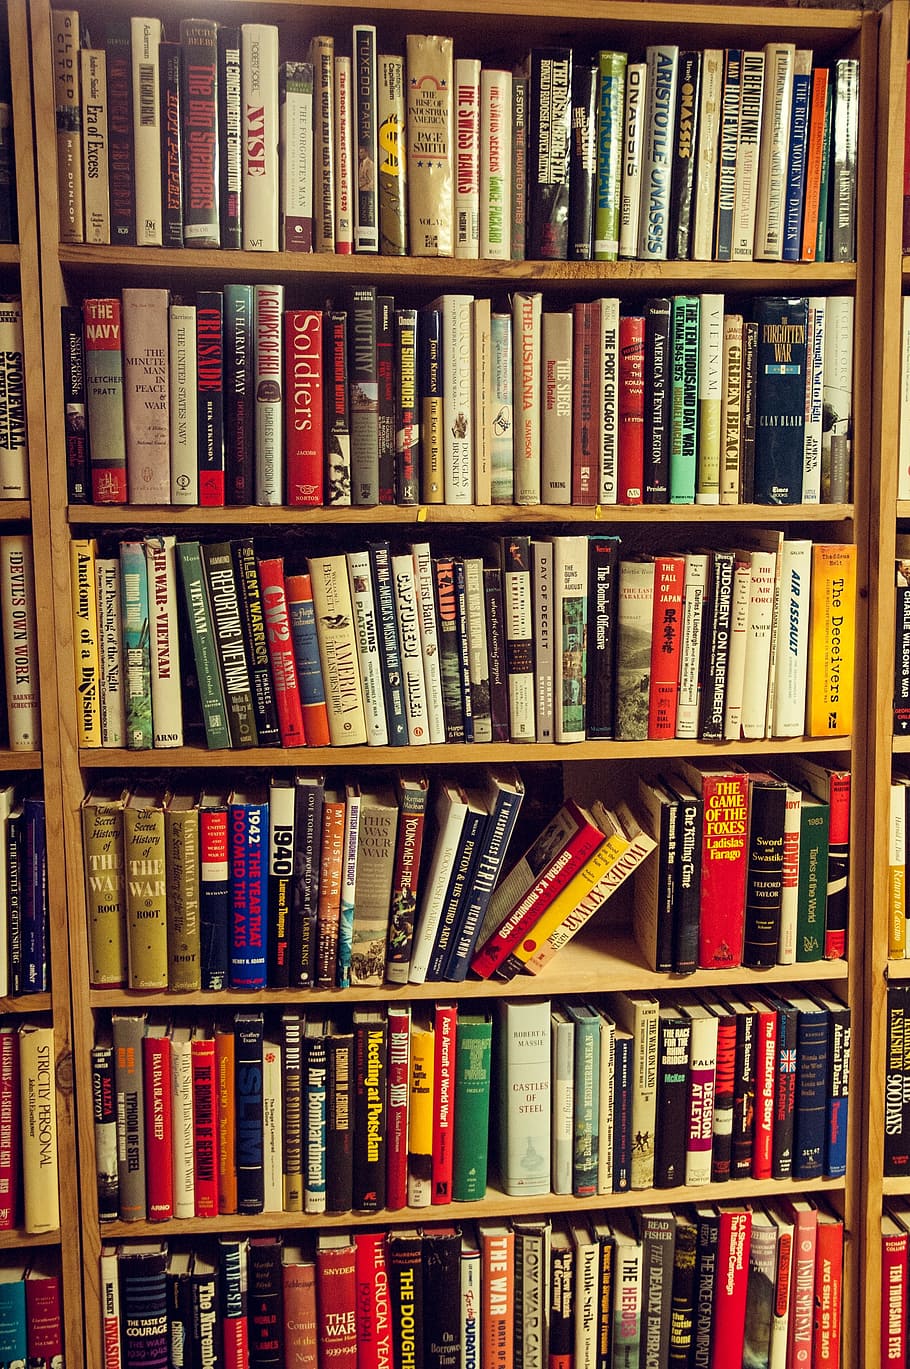 lote de libros, marrón, madera, estante, libros, estantería, librería, lectura, educación, libro